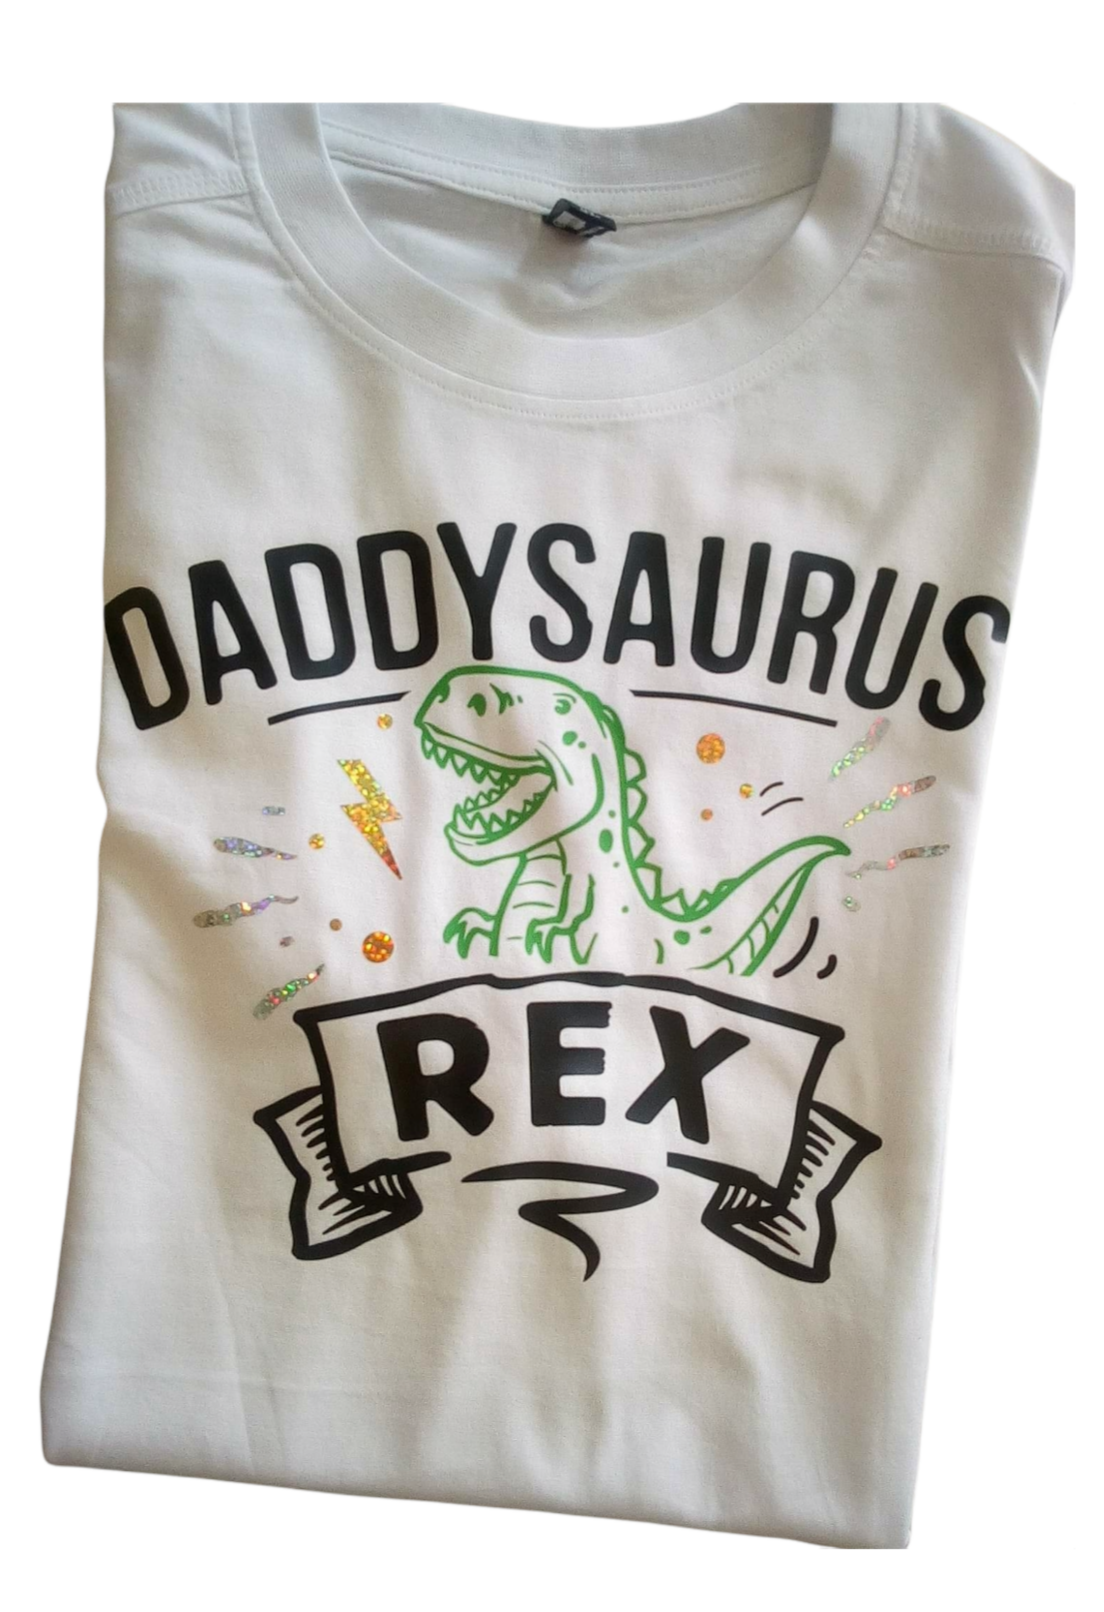 Daddysaurus t shirt